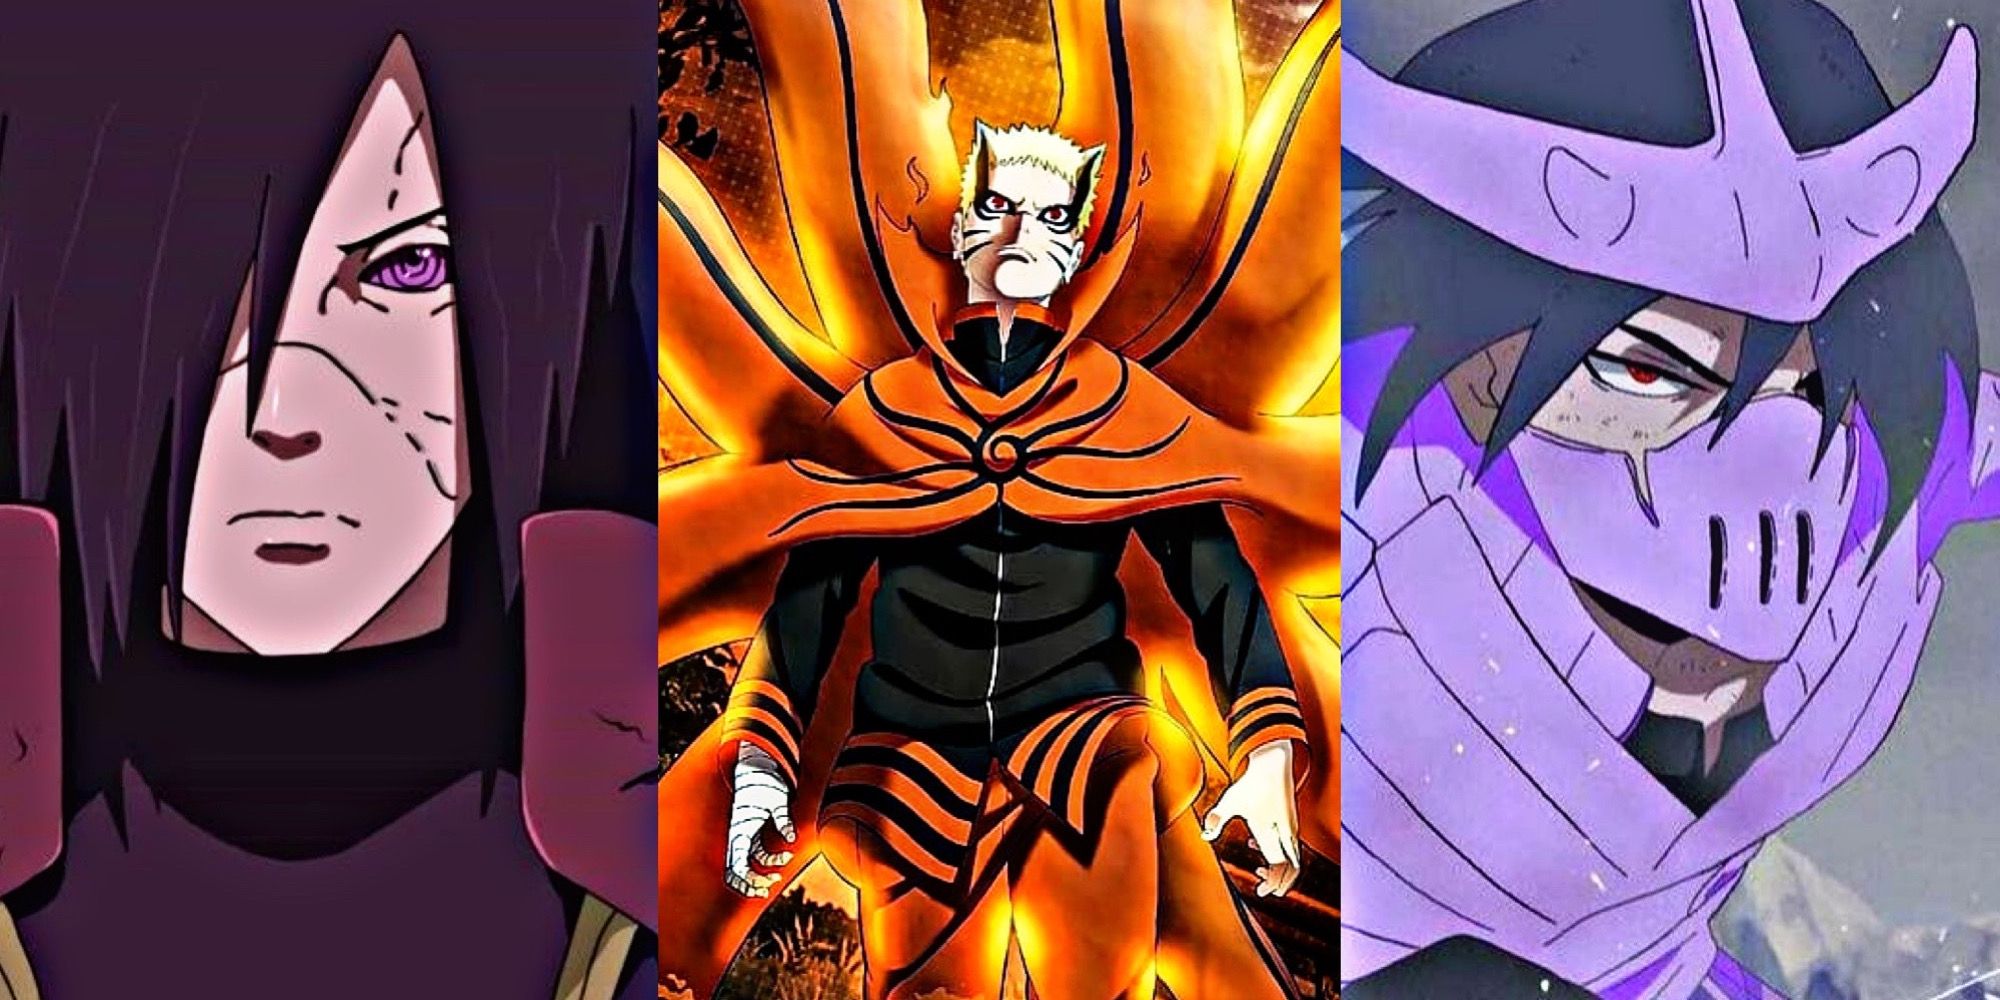 Can Hashirama Senju overpower all Hokage, except Naruto, at the